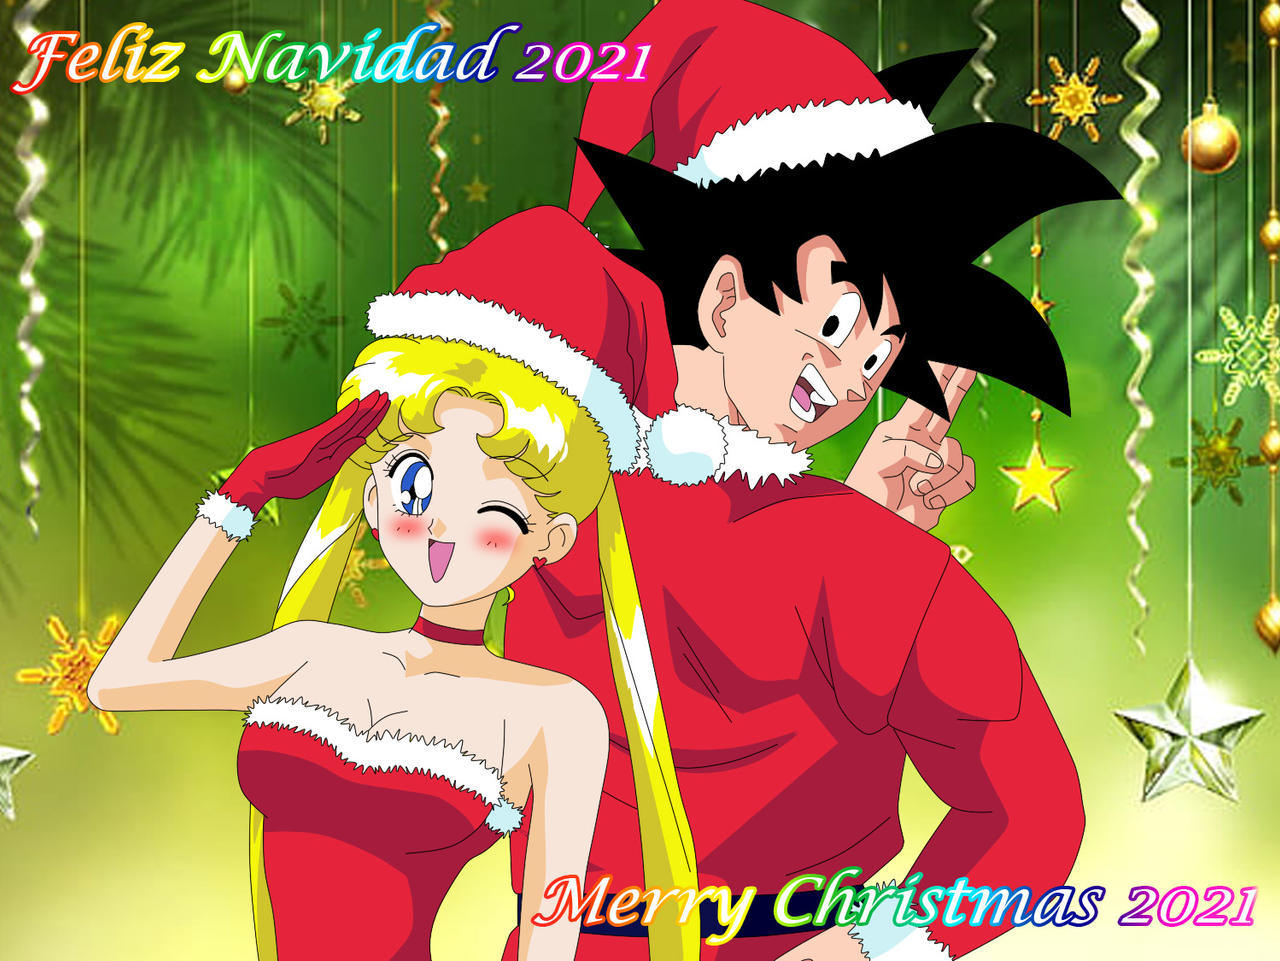 Goku y Usagi Feliz Navidad 2021 by gonzalossj3 on DeviantArt